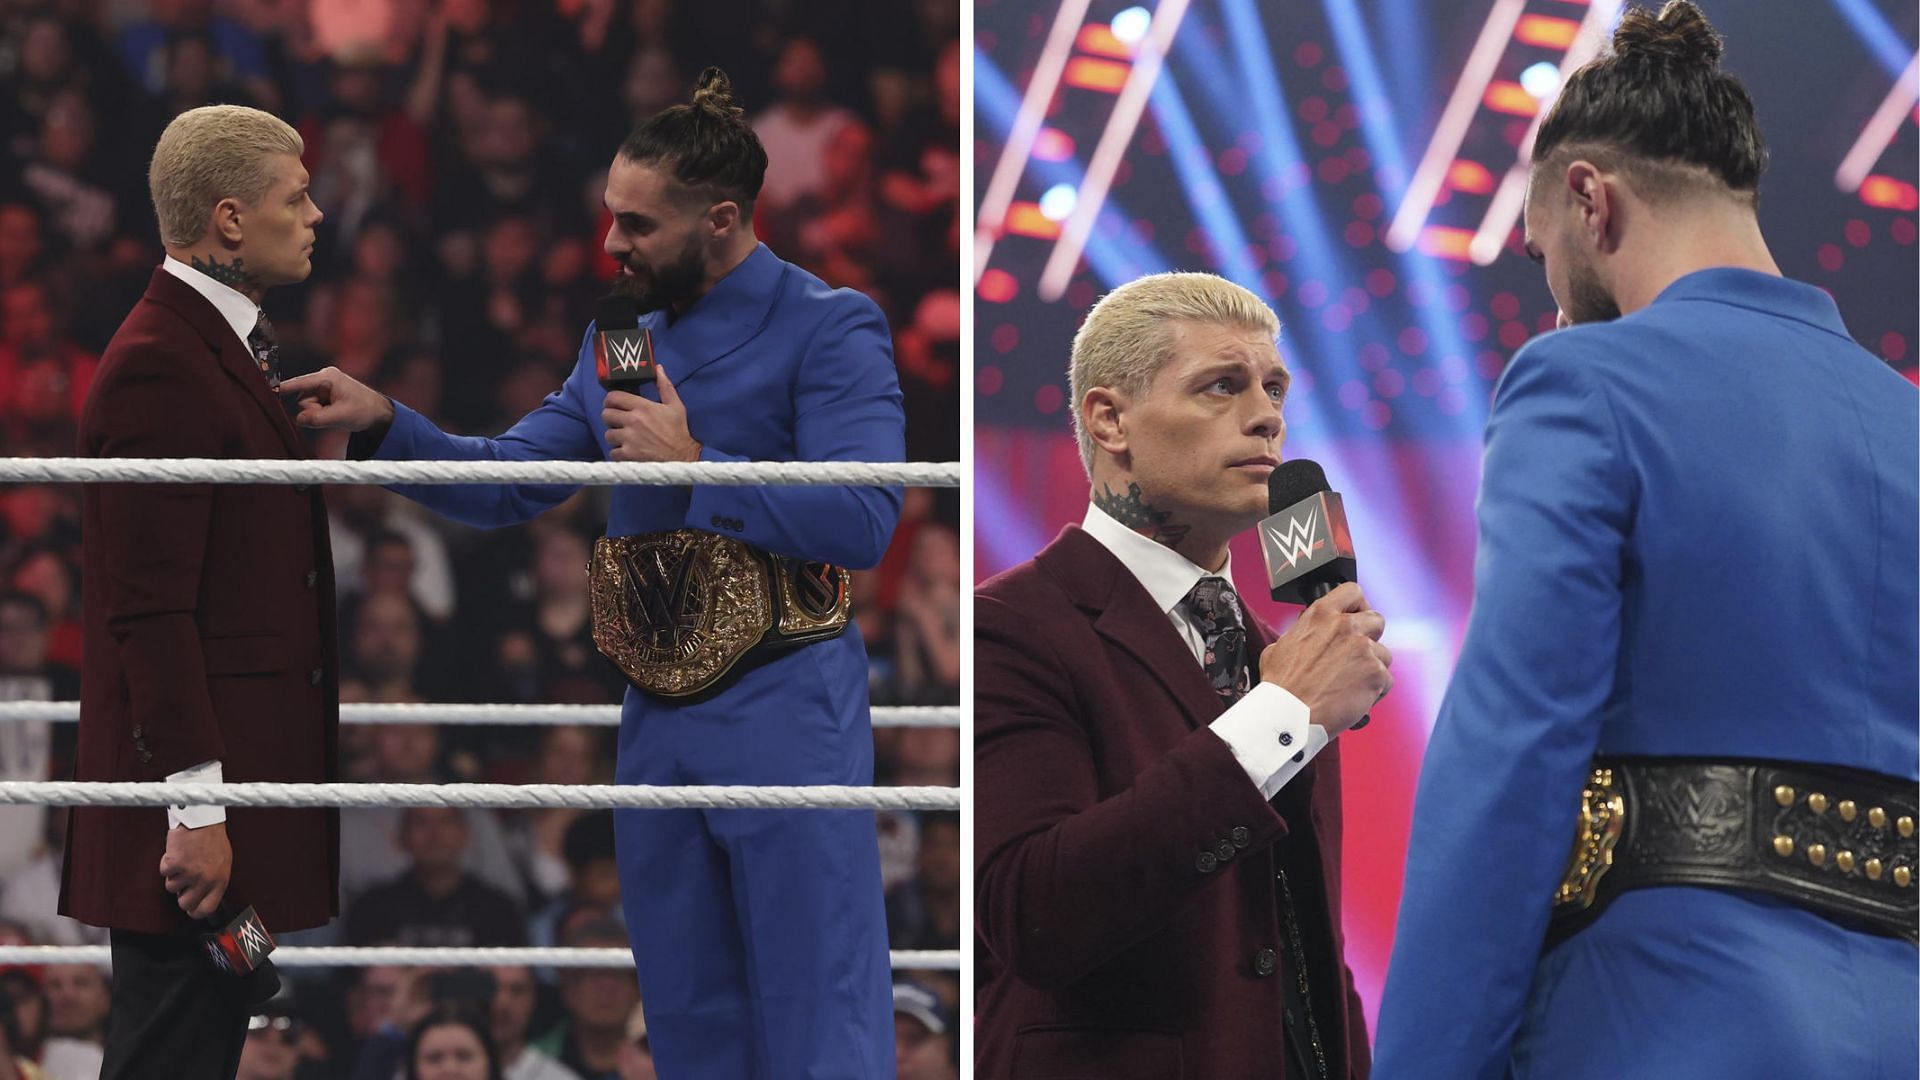 Cody Rhodes and Seth Rollins perform on RAW [Image credits: WWE.com]